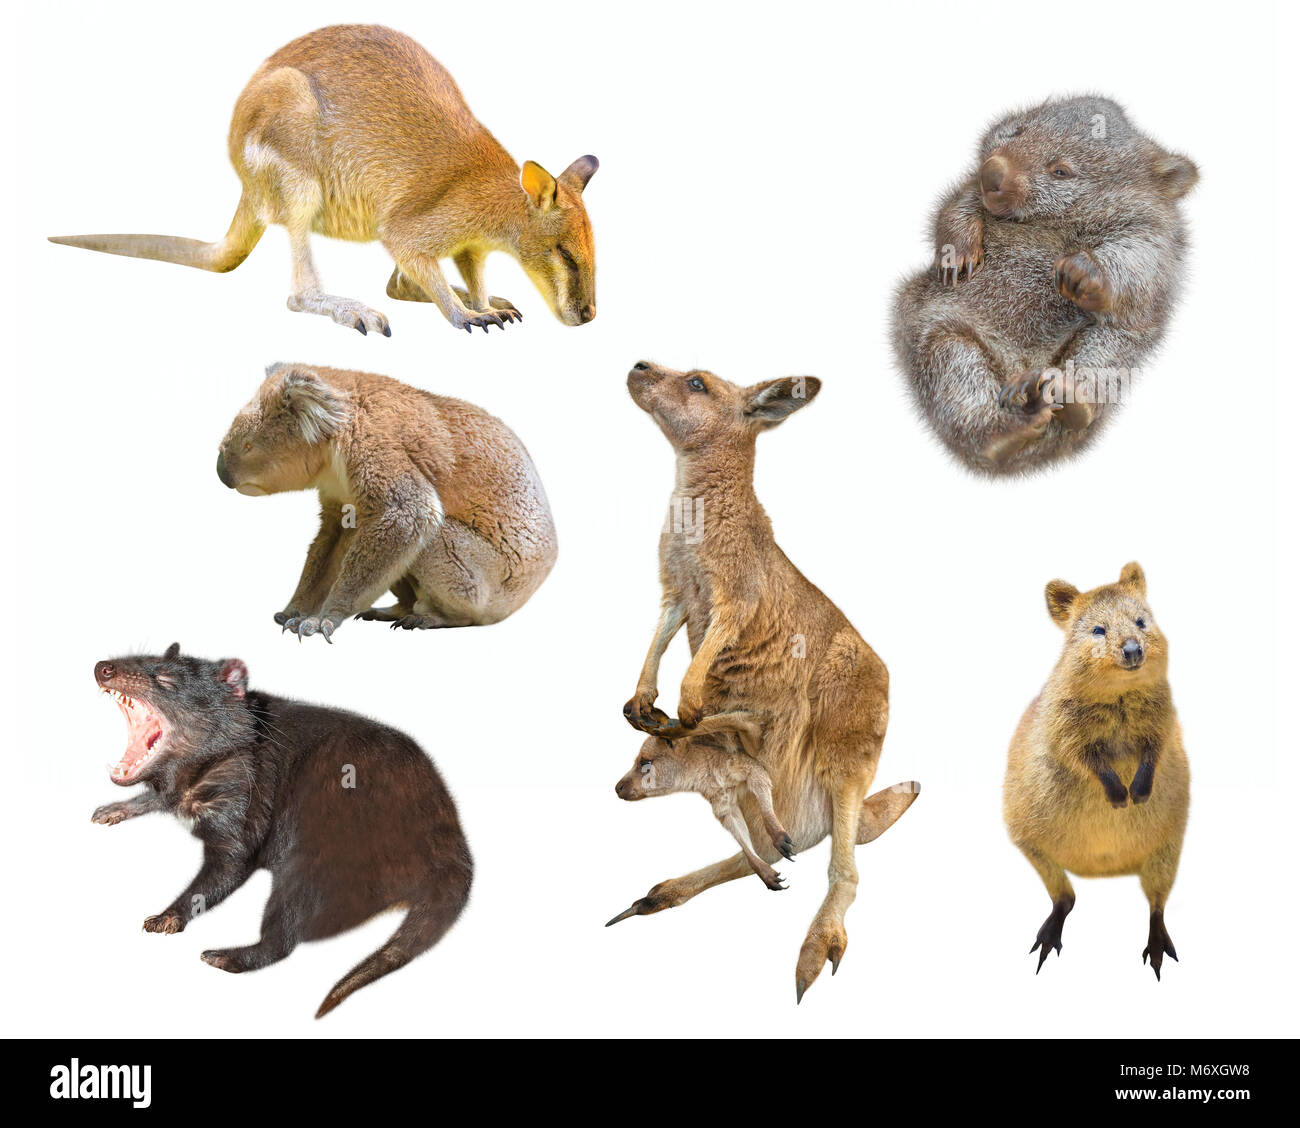 Collage of Australian marsupial mammals, isolated on white background. Wallaby, Tasmanian Devil, Wombat, Kangaroo with Joey, Quokka and Koala. Stock Photo